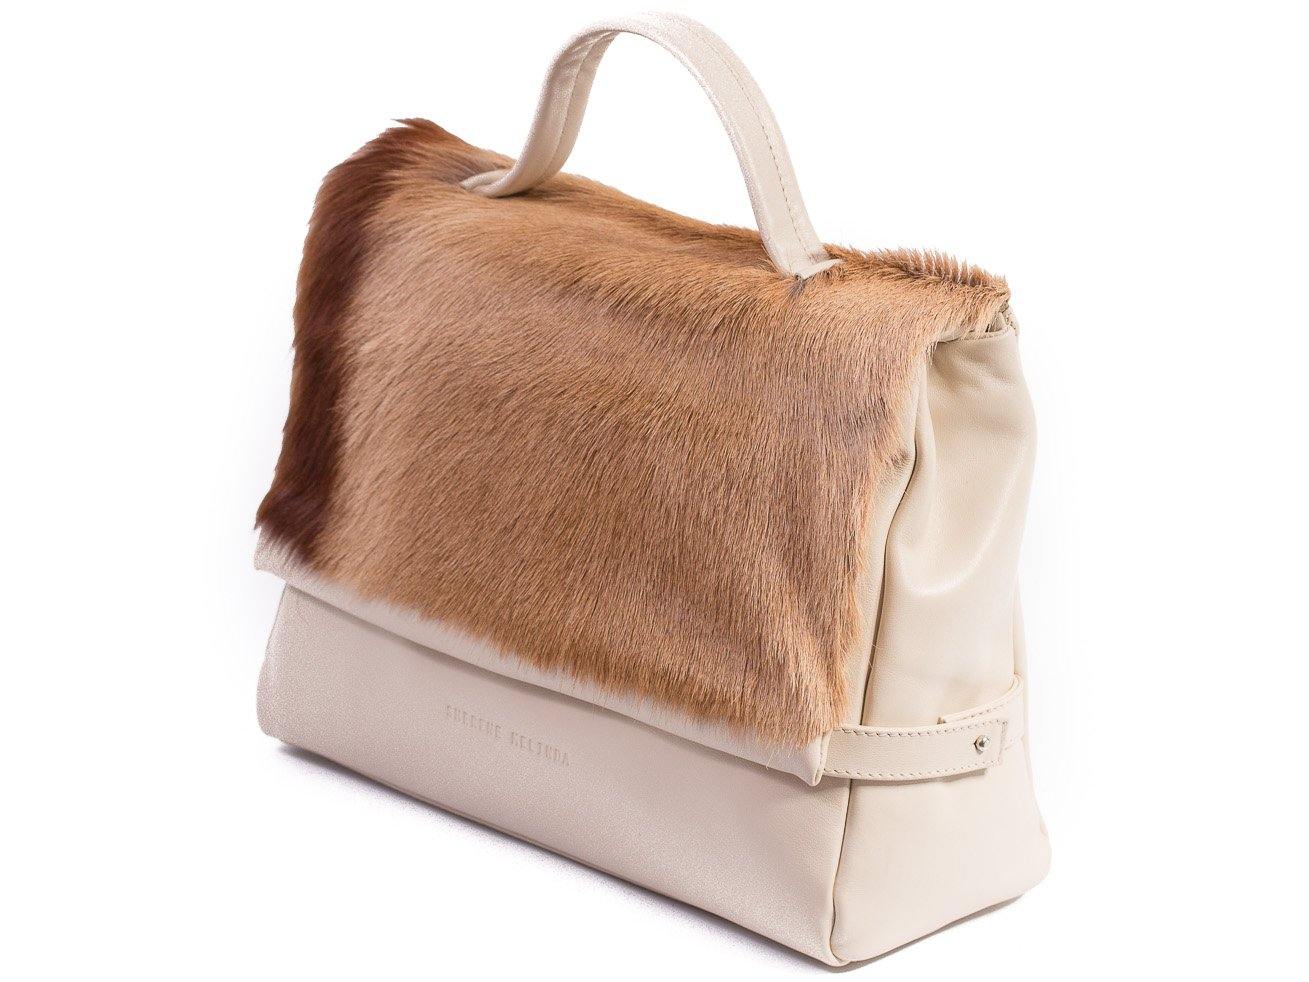 sherene melinda springbok hair-on-hide natural leather smith tote bag Stripe side angle